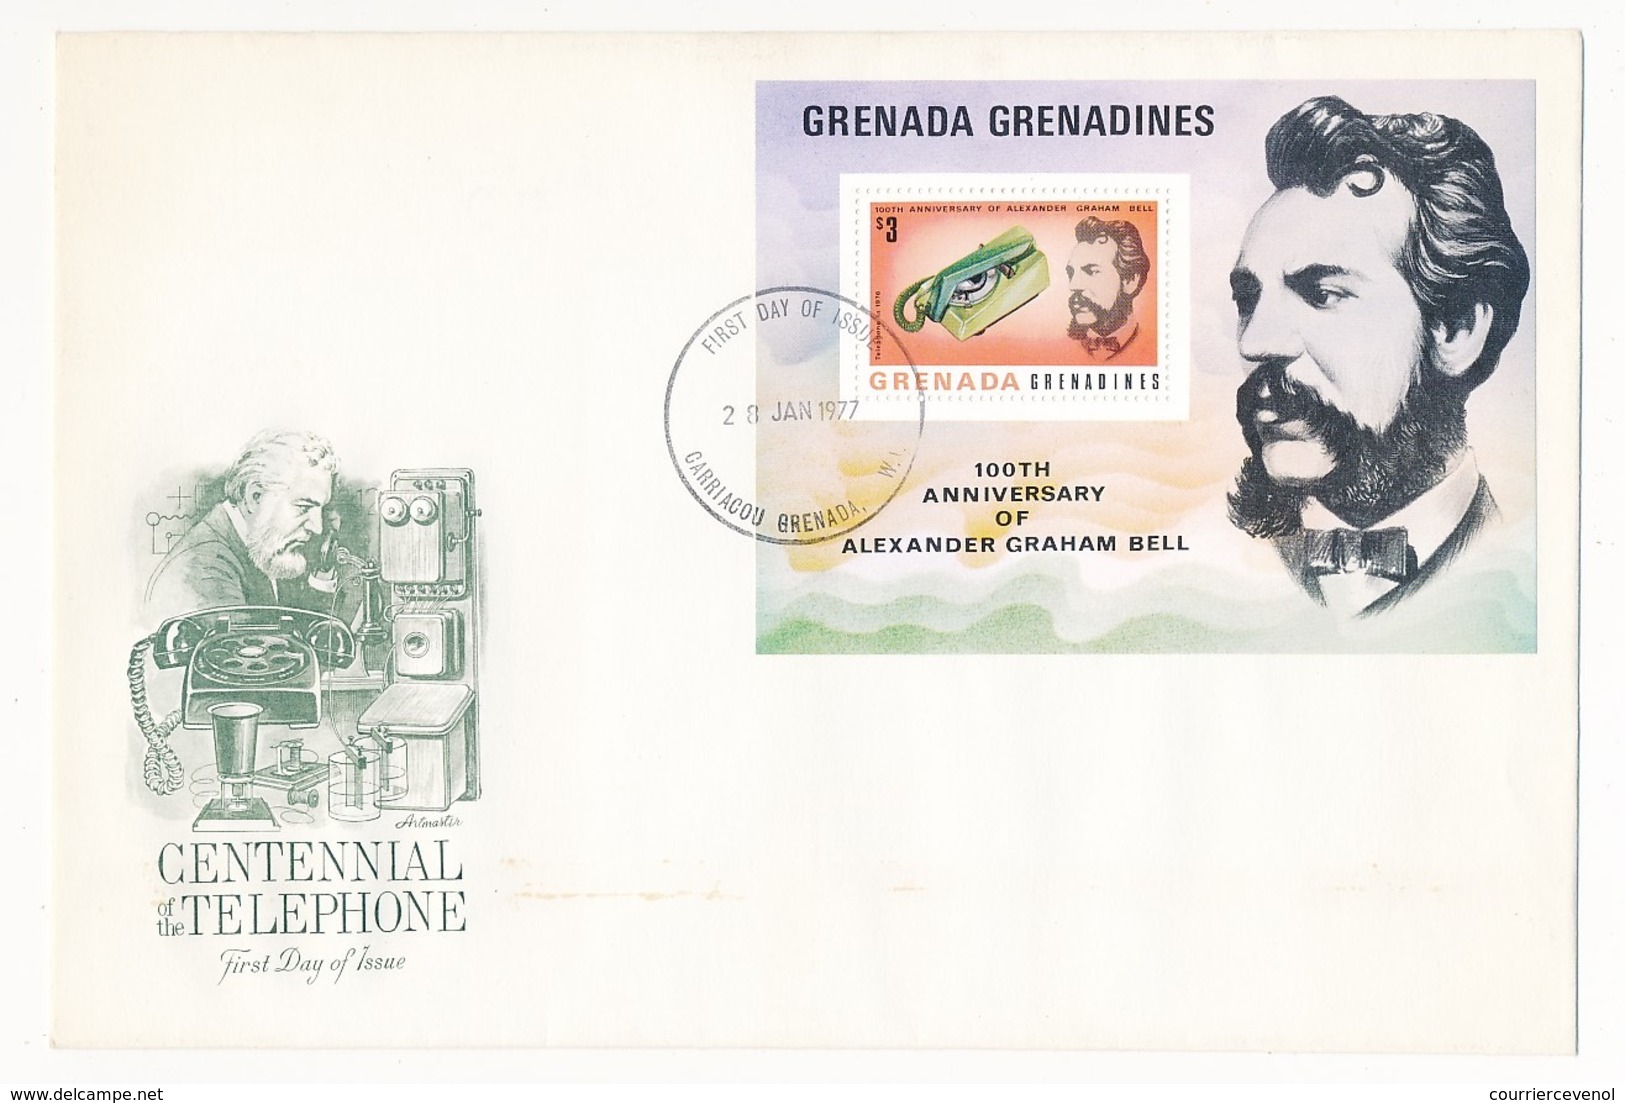 GRENADA - GRENADINES - 3 Enveloppes FDC - Centenaire Du Téléphone - Graham BELL - 1977 - Telecom